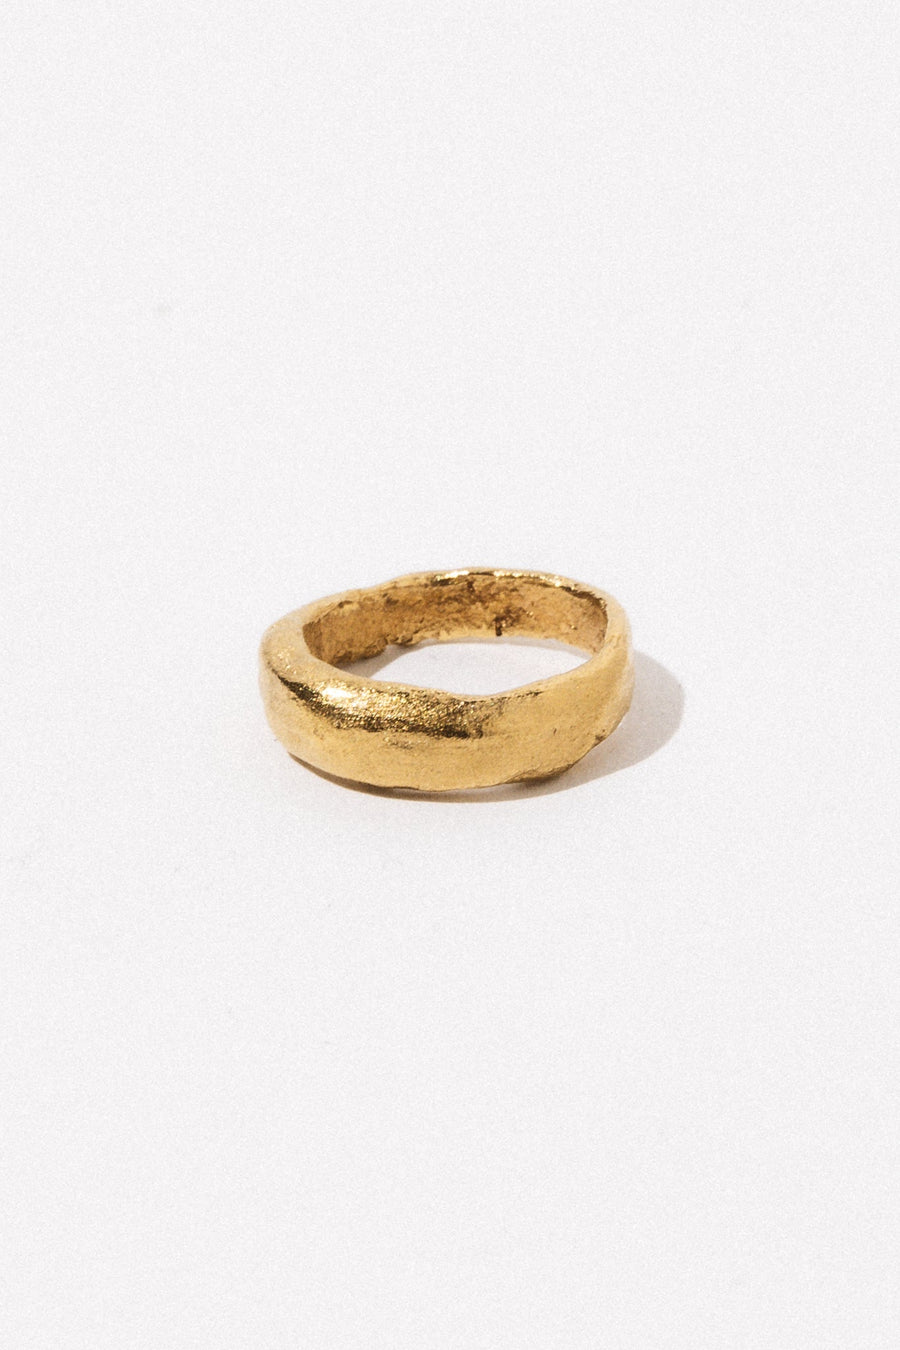 JUNO Jewelry US 6 / Brass Luna Ring